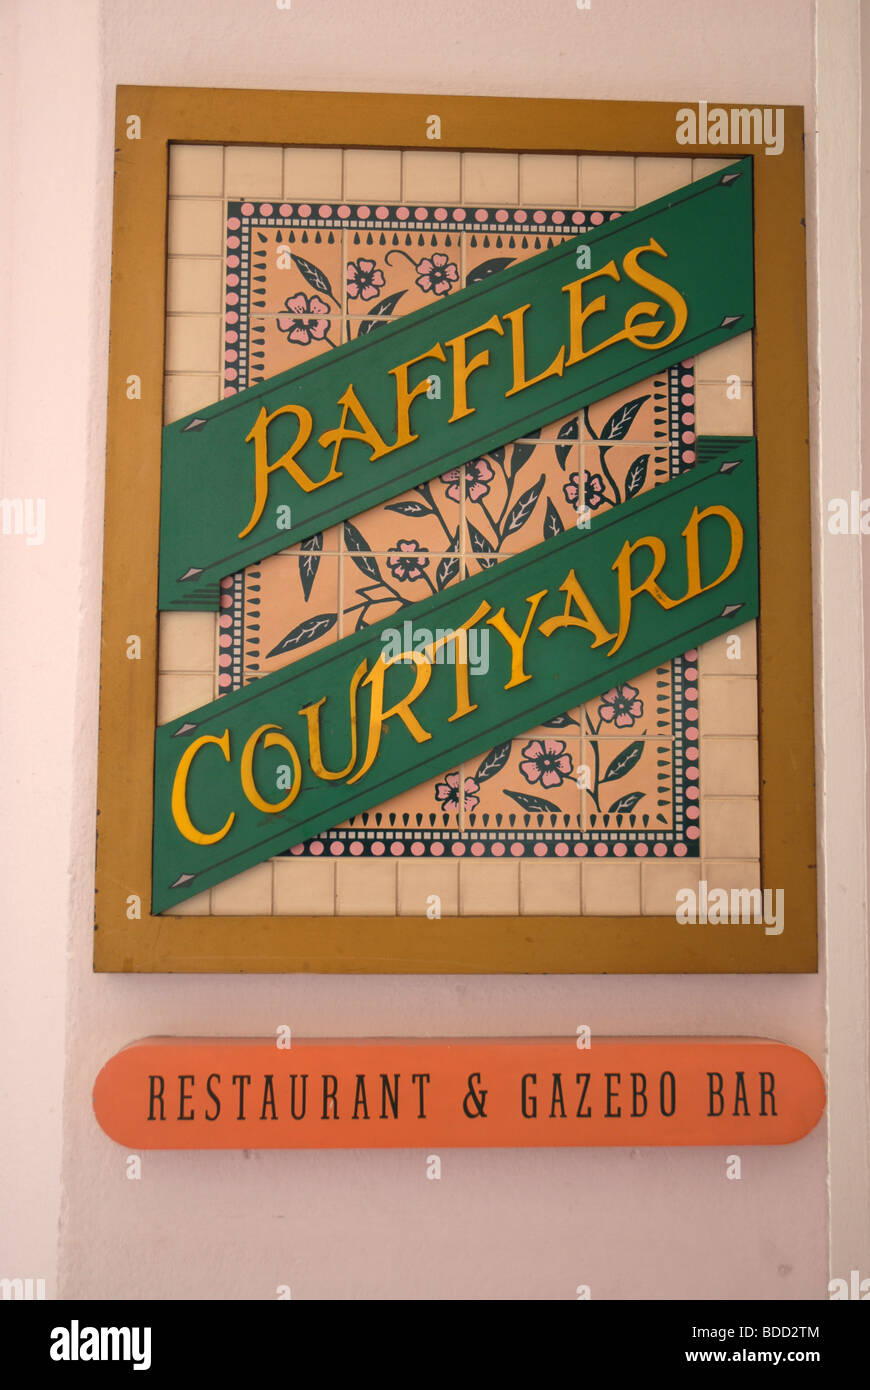 Raffles Courtyard Restaurant & Gazebo Bar sign, Raffles Hotel, Singapore Stock Photo